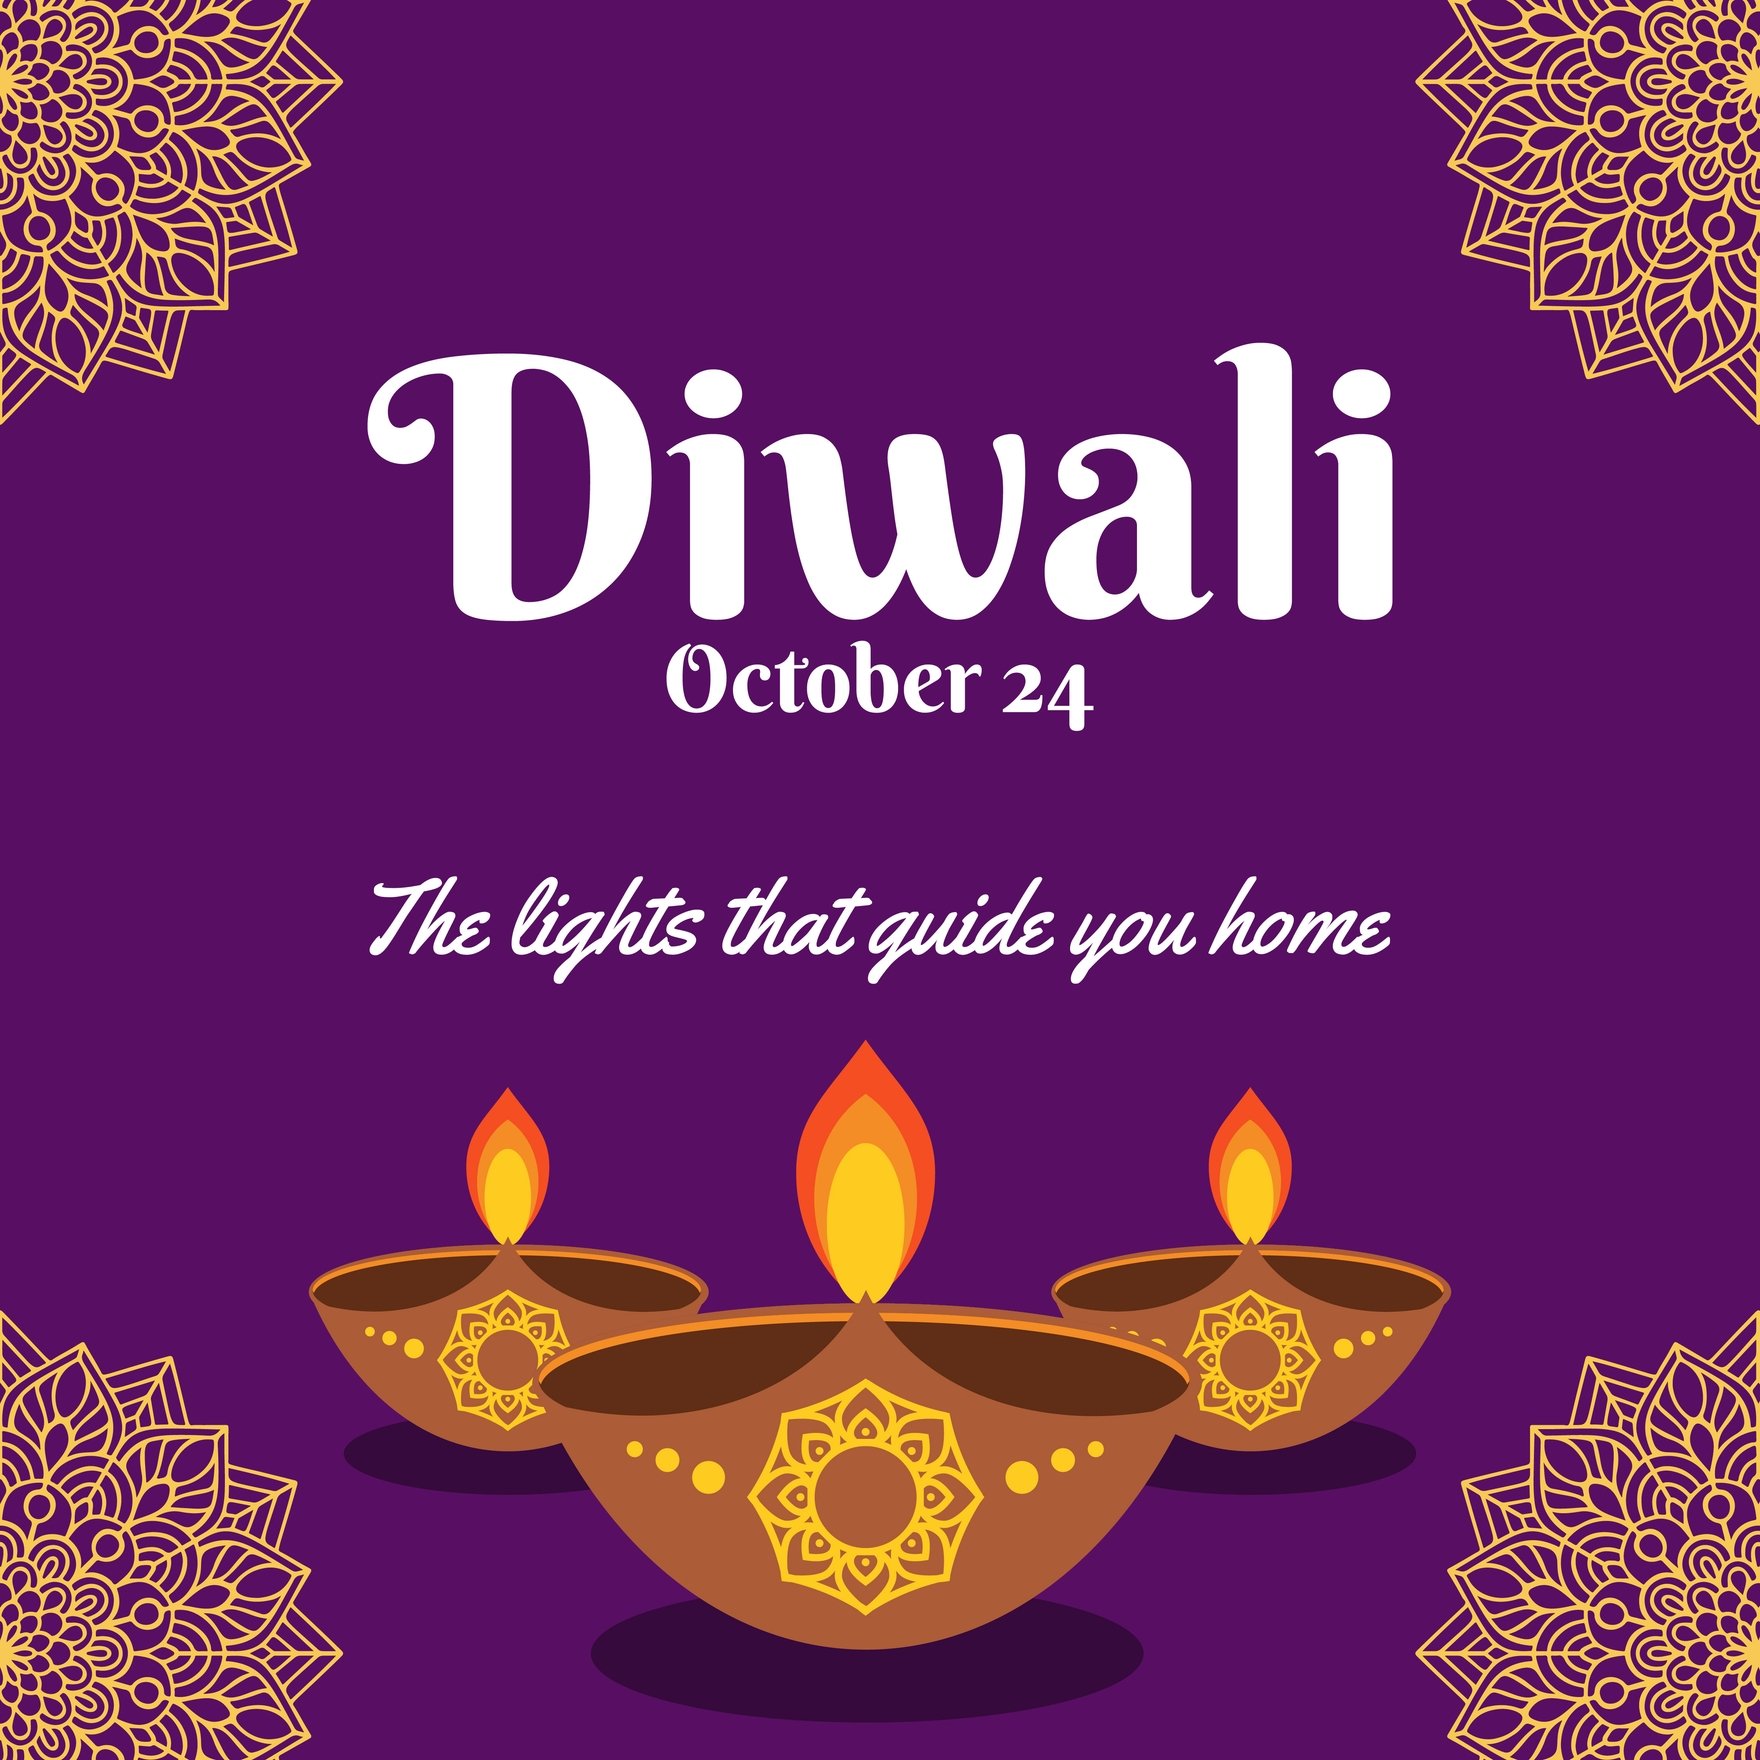 Free Diwali Instagram Post